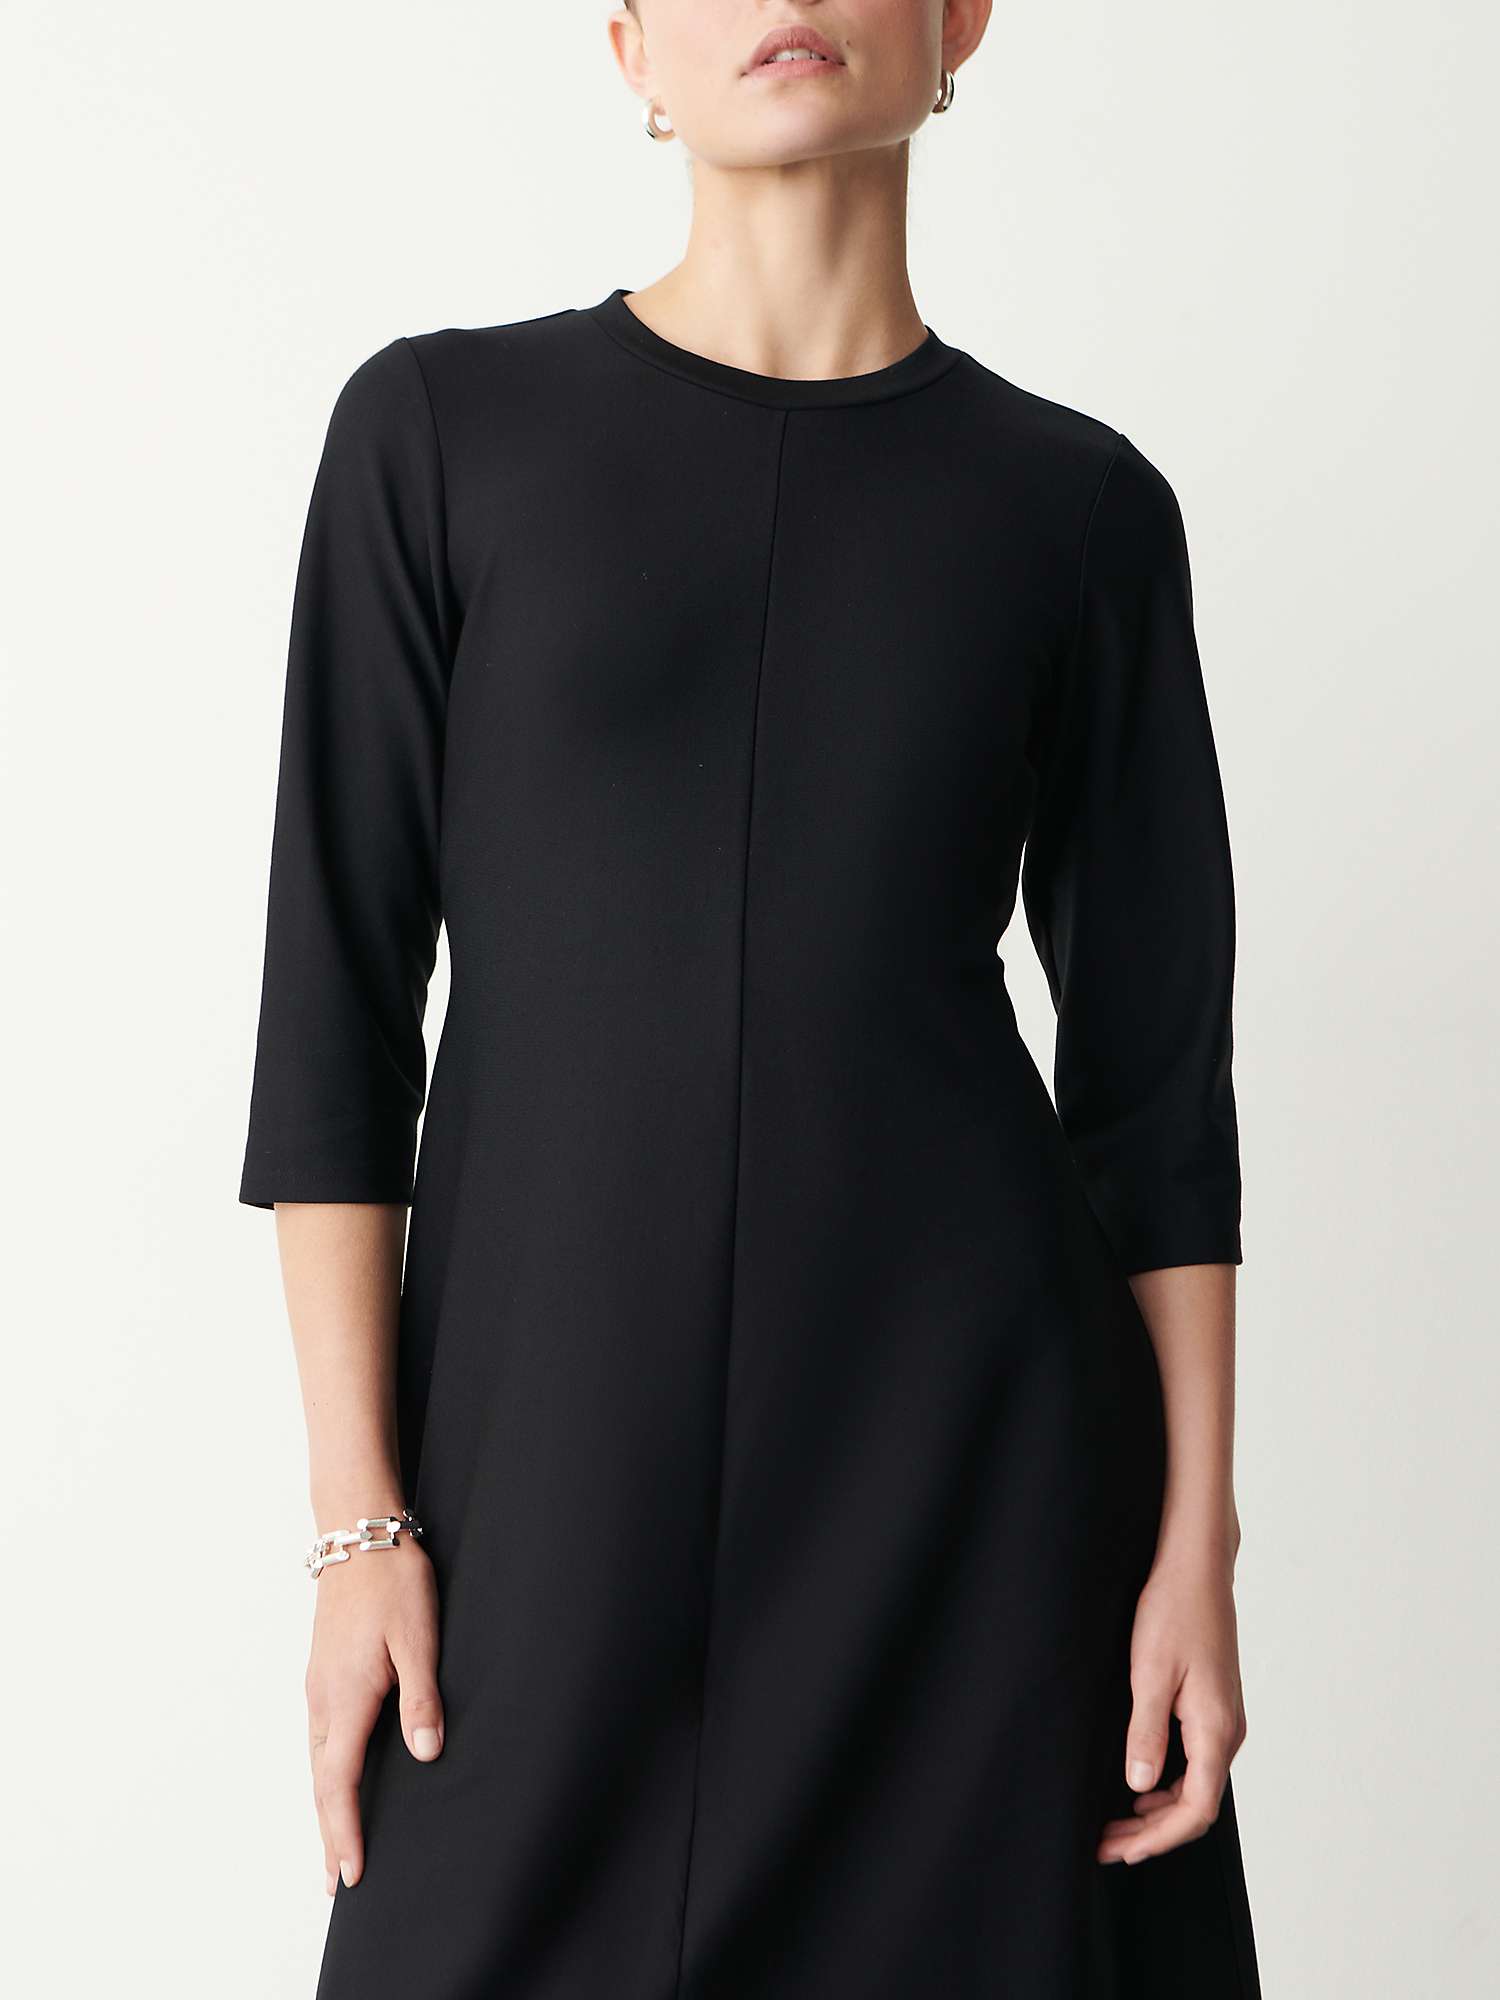 Finery Hazel Midi Dress, Black at John Lewis & Partners